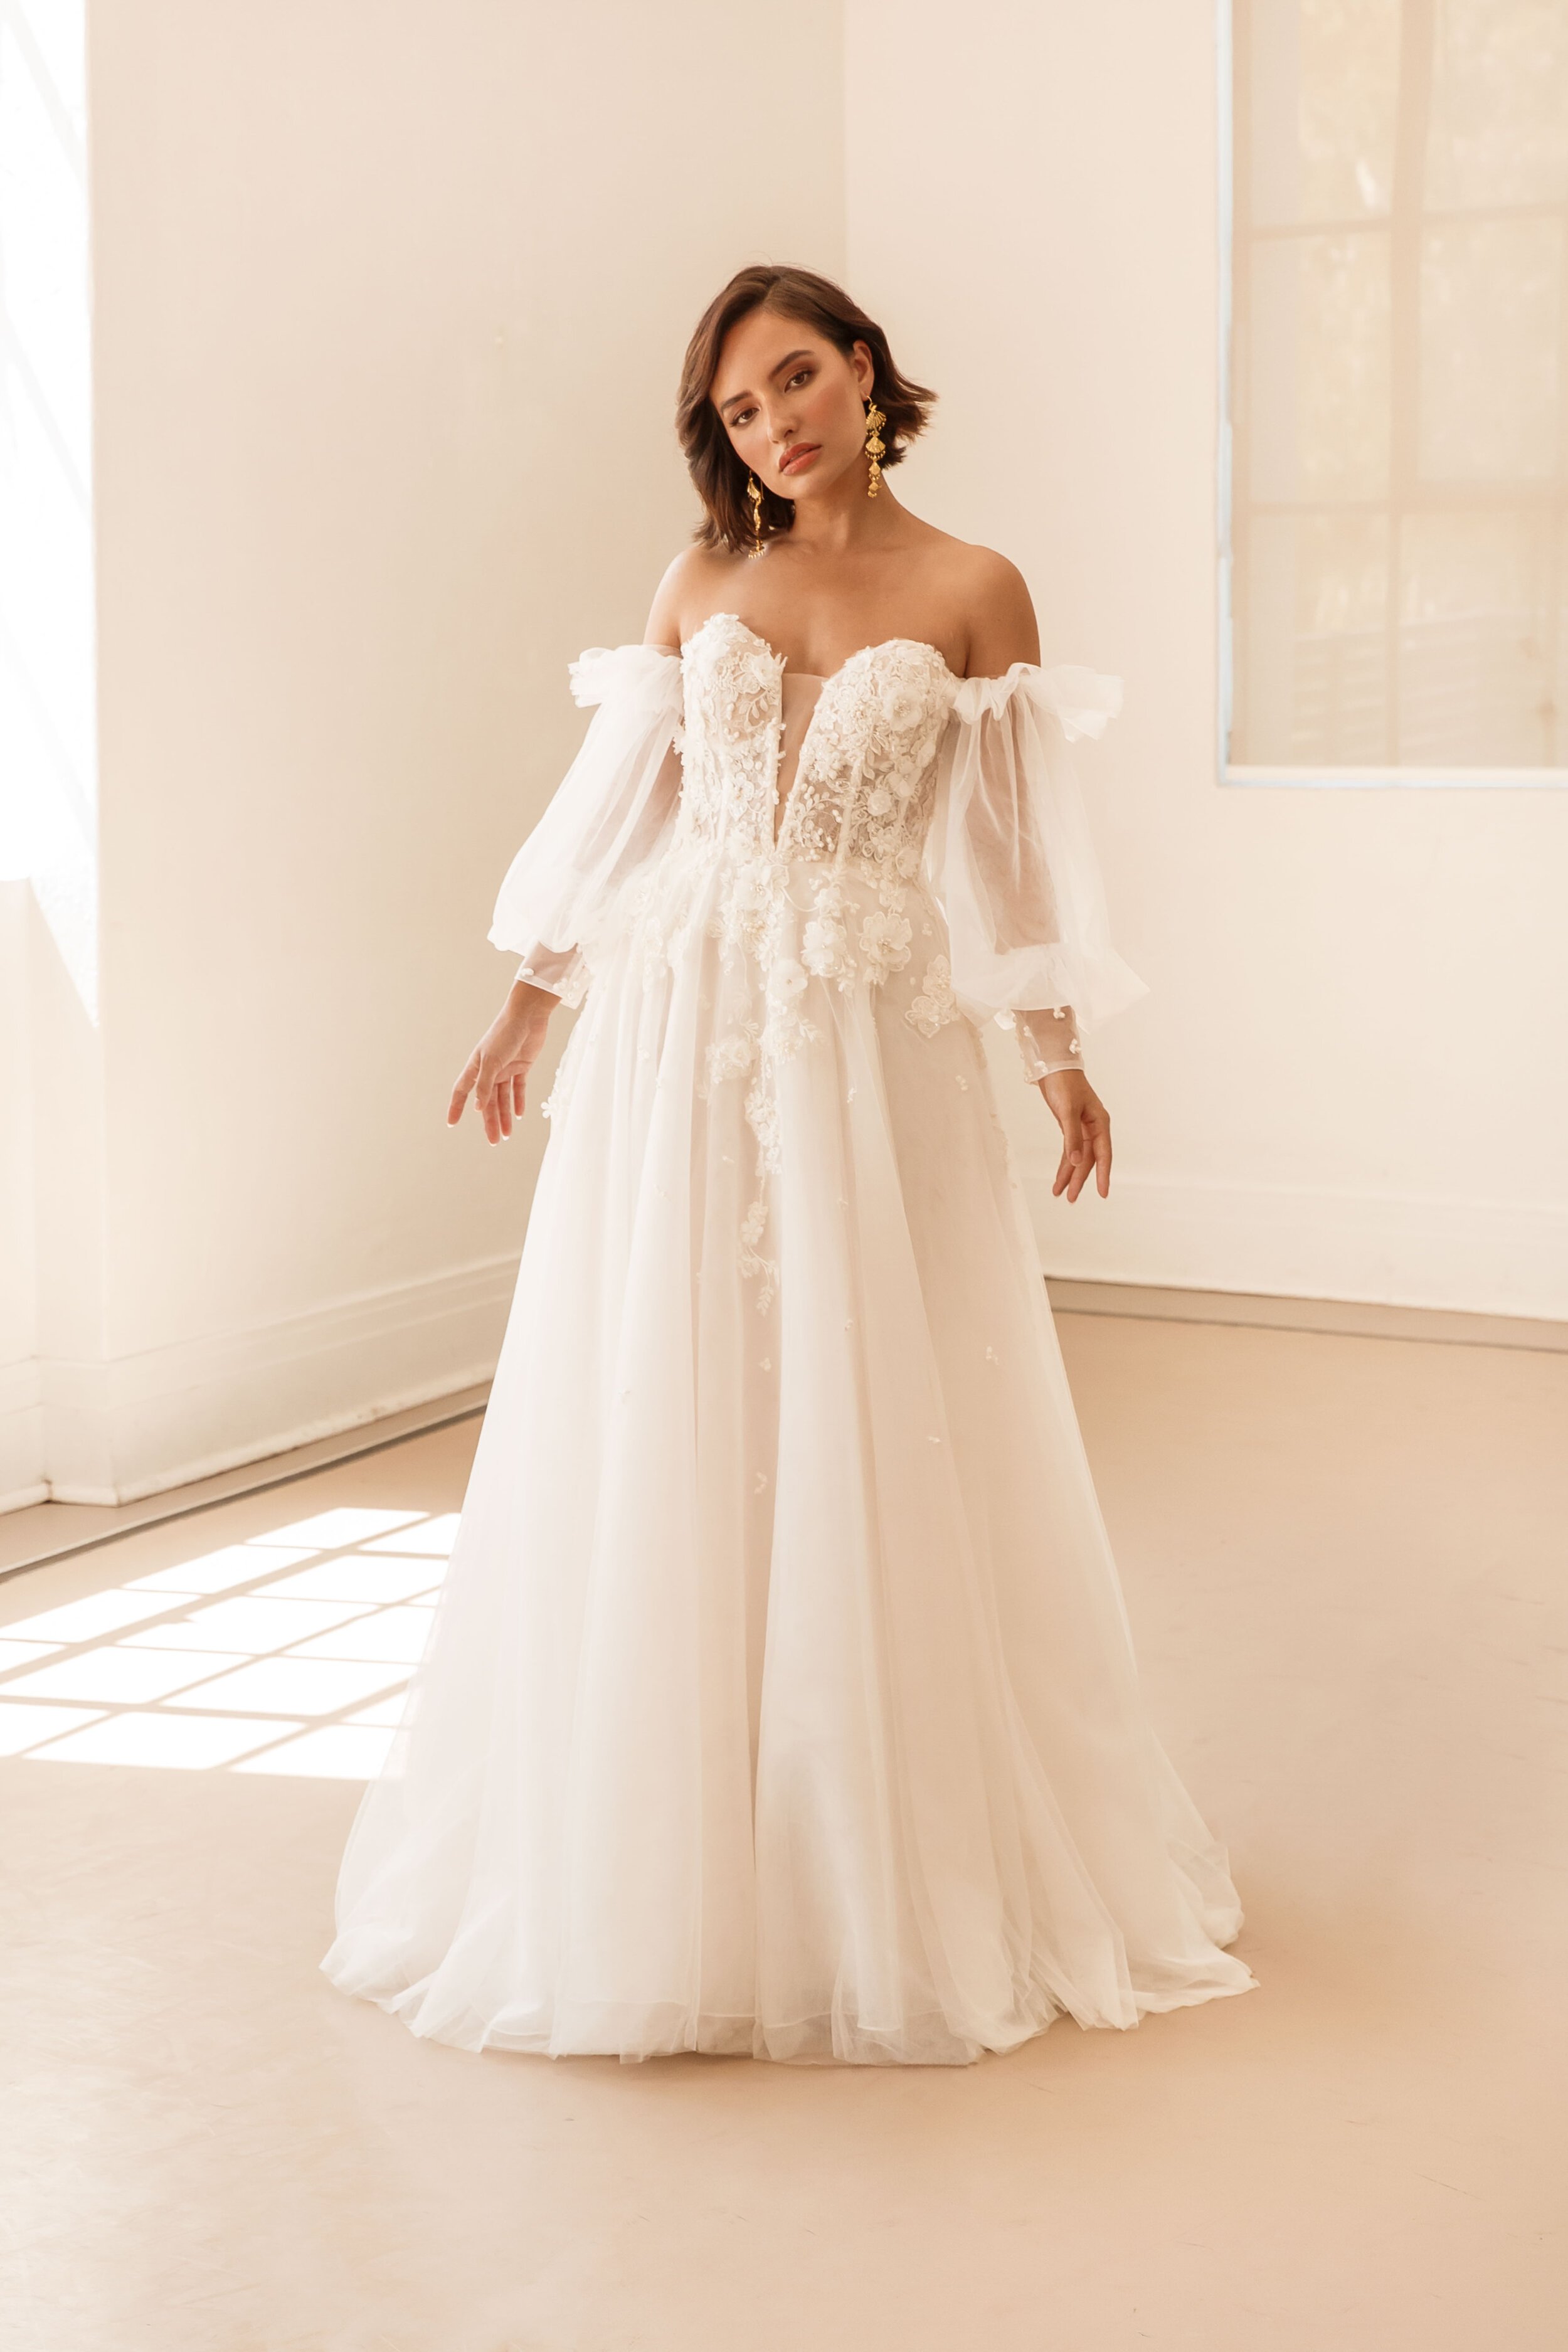 Top 10 Winter Dresses for 2022 — Cizzy Bridal Australia